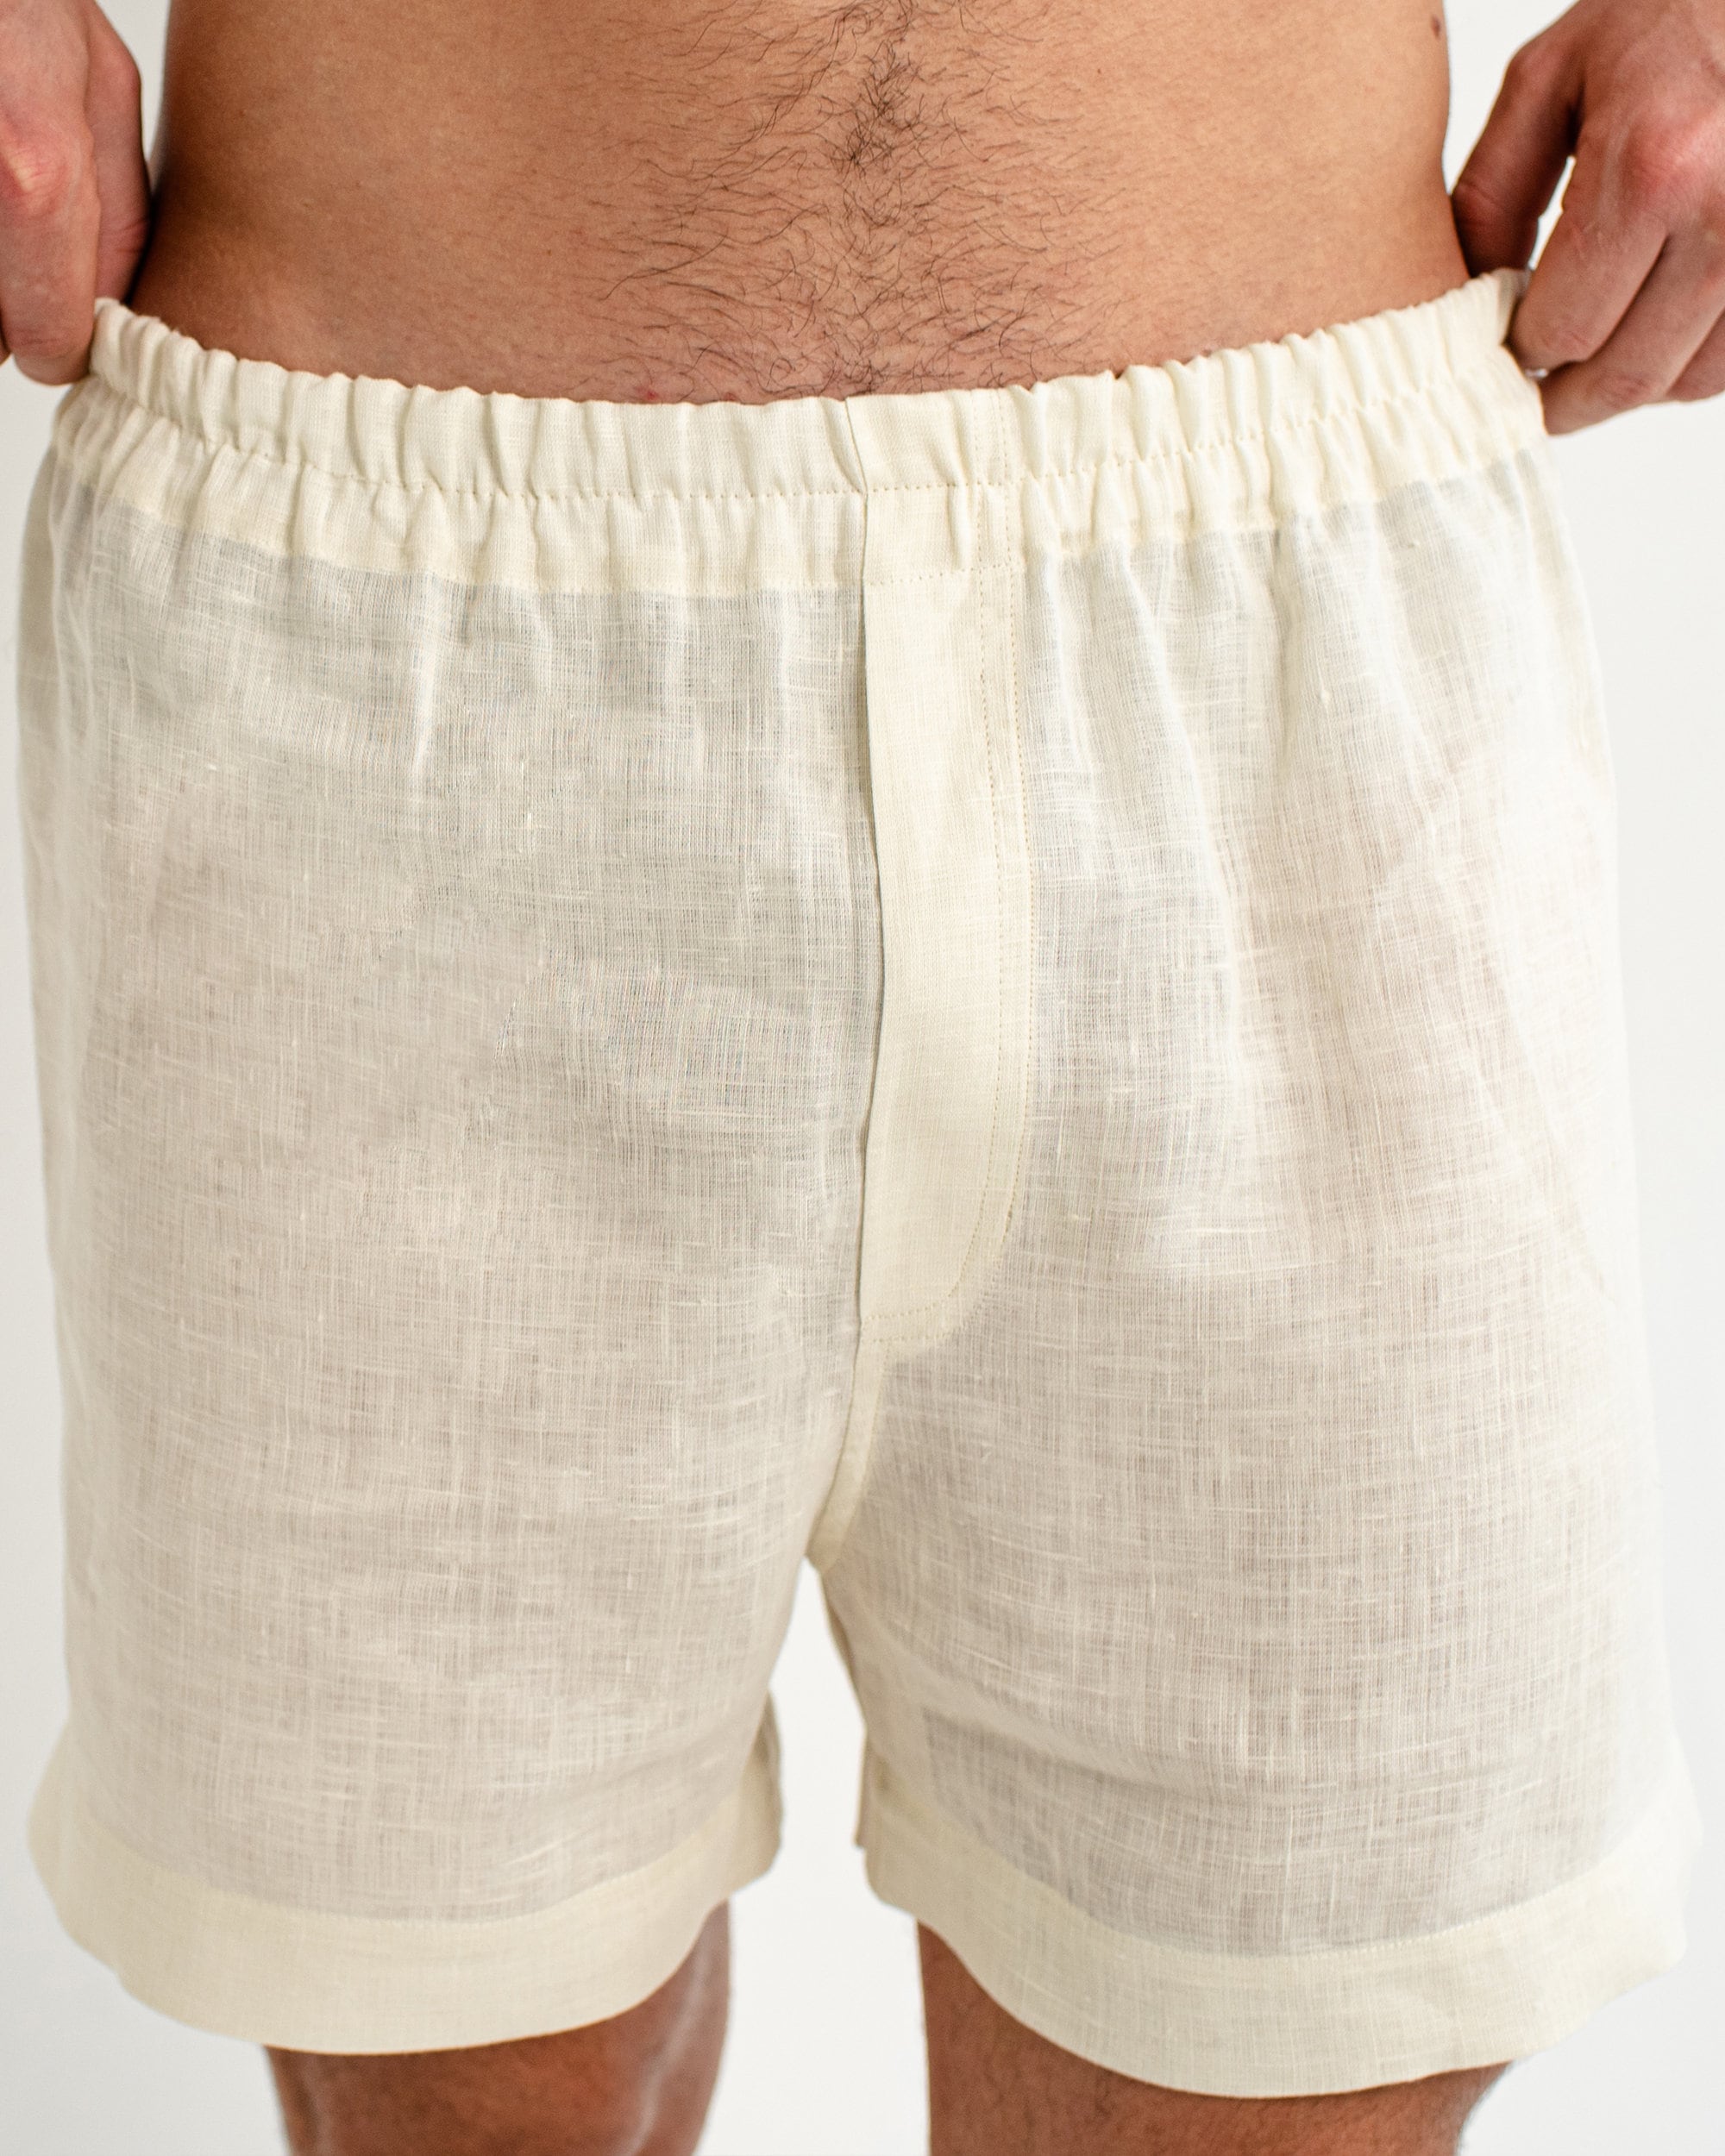 WHITE BOXER SHORTS, Linen Shorts, Men's Boxer Shorts, Linen Boxers, Linen  Underwear Men, Gift for Him, Organic Boxer Shorts, Sleep Shorts -   Canada